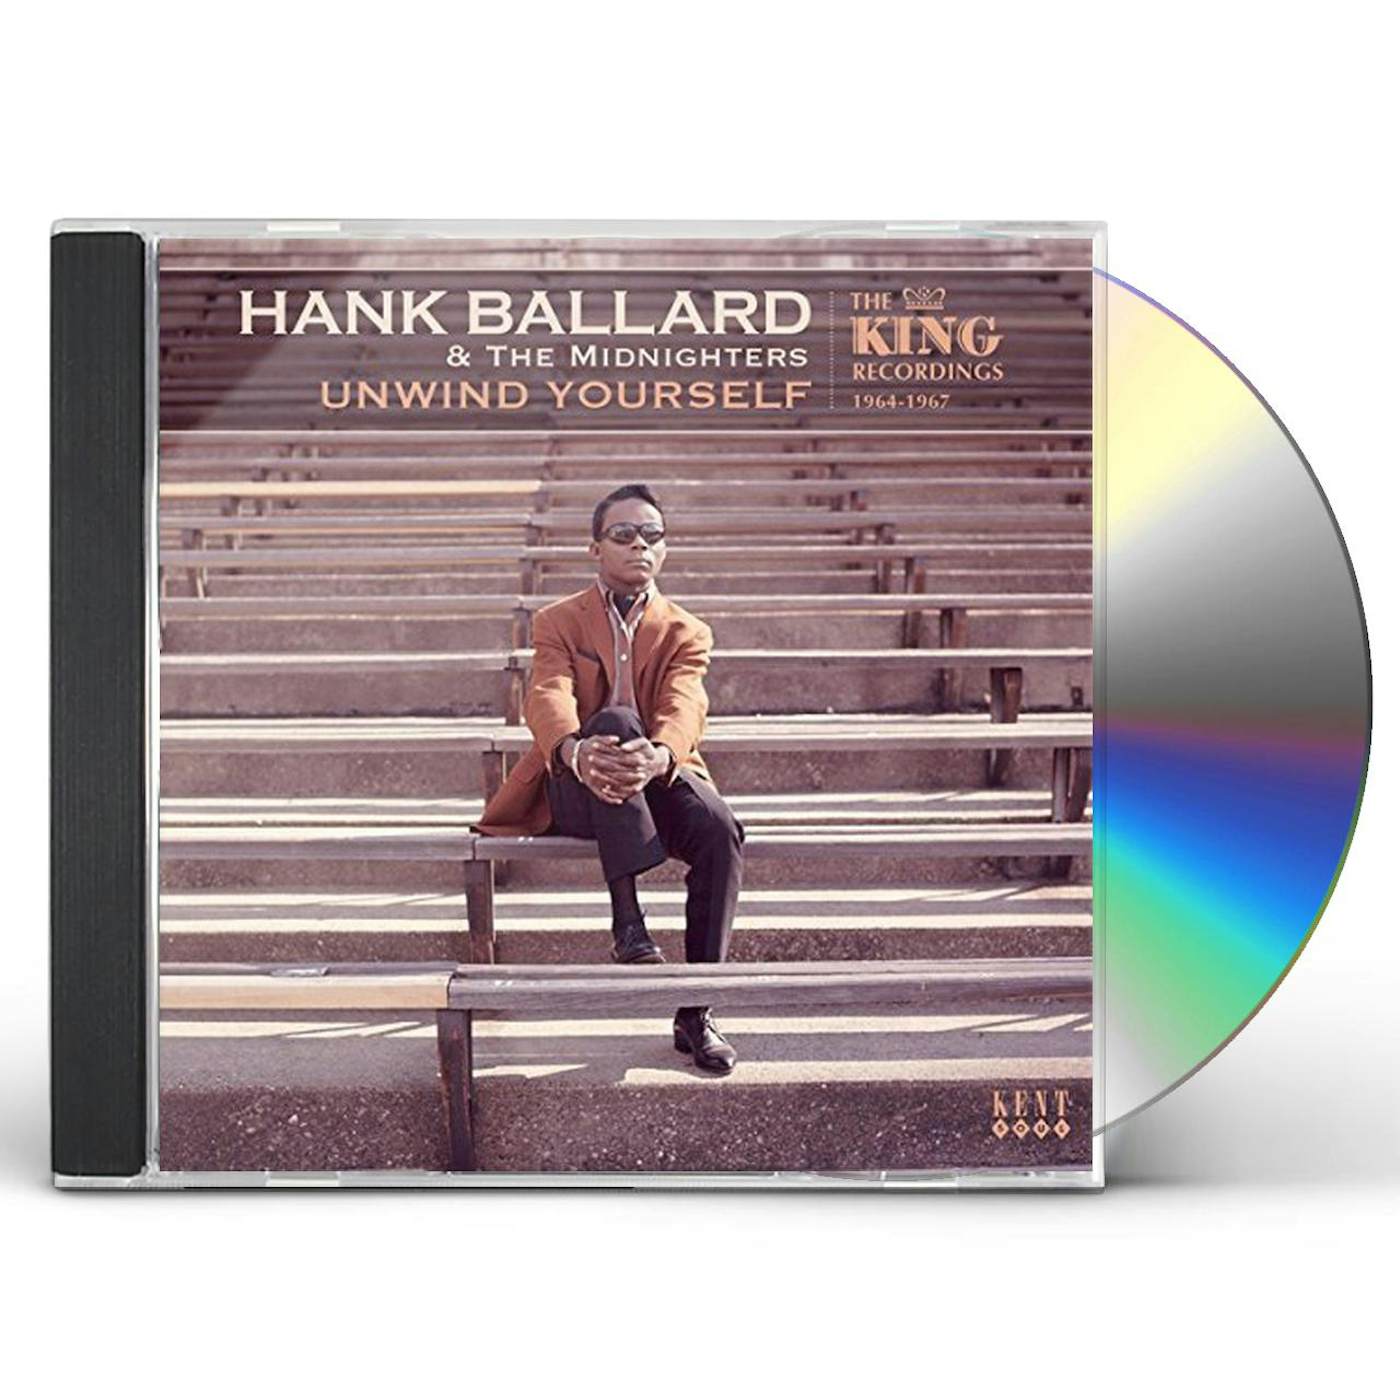 Hank Ballard Unwind Yourself: The King Recordings of 1964-1967 CD